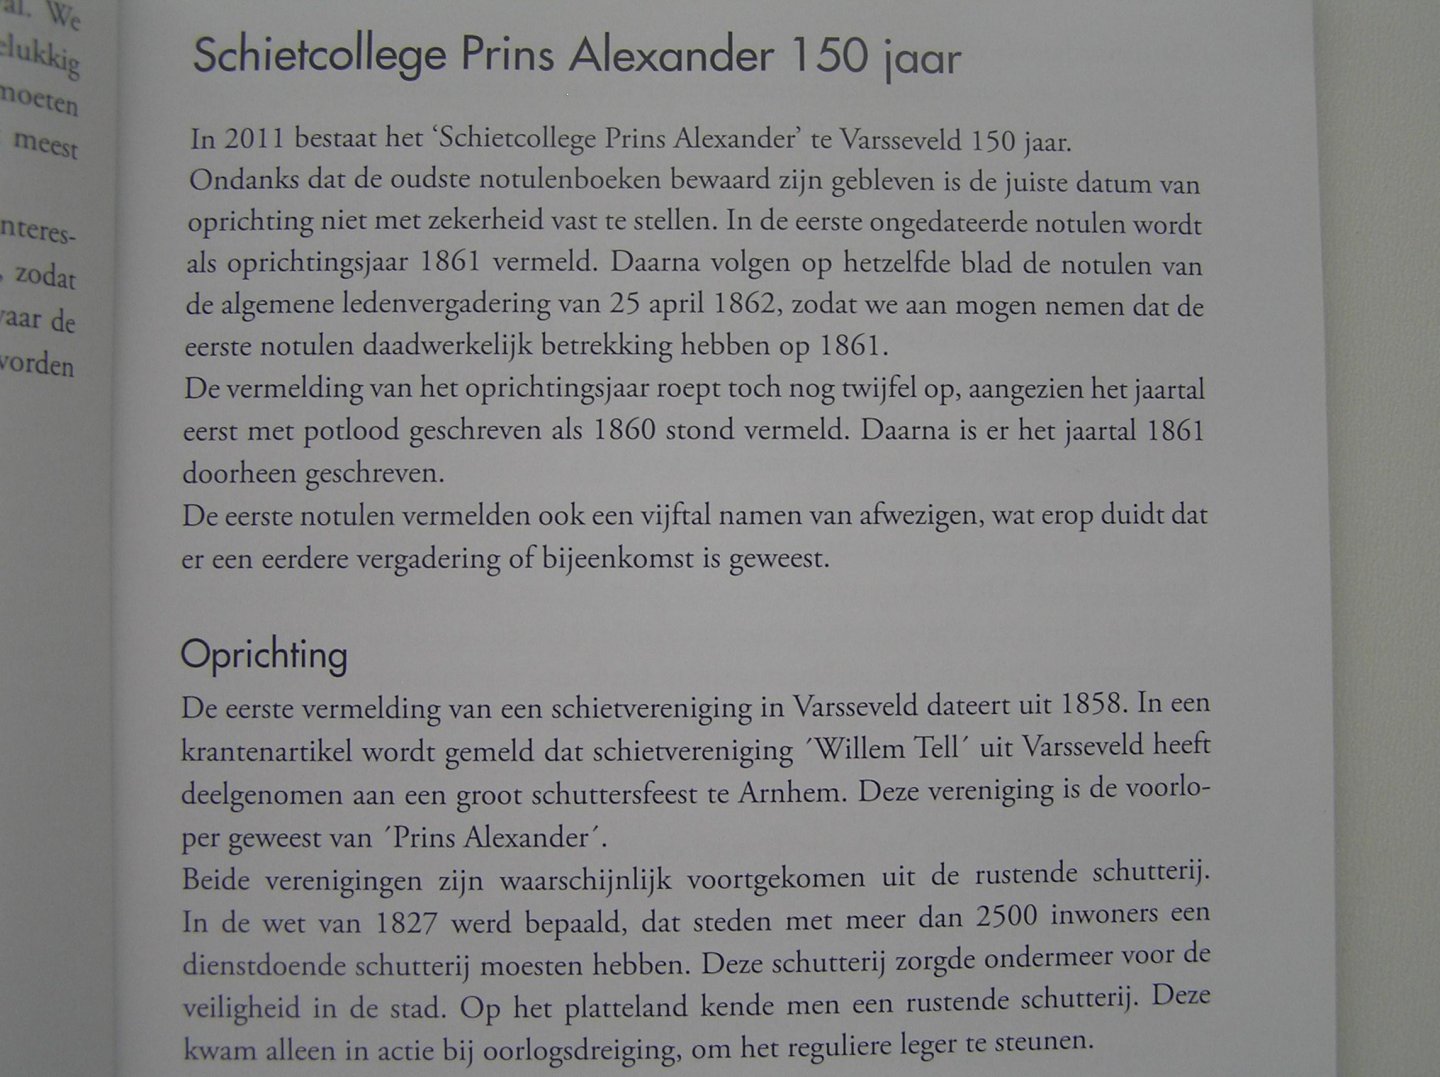 Bruil G. e.a. - Schietcollege Prins Alexander 150 jaar 1861-2011 Varsseveld